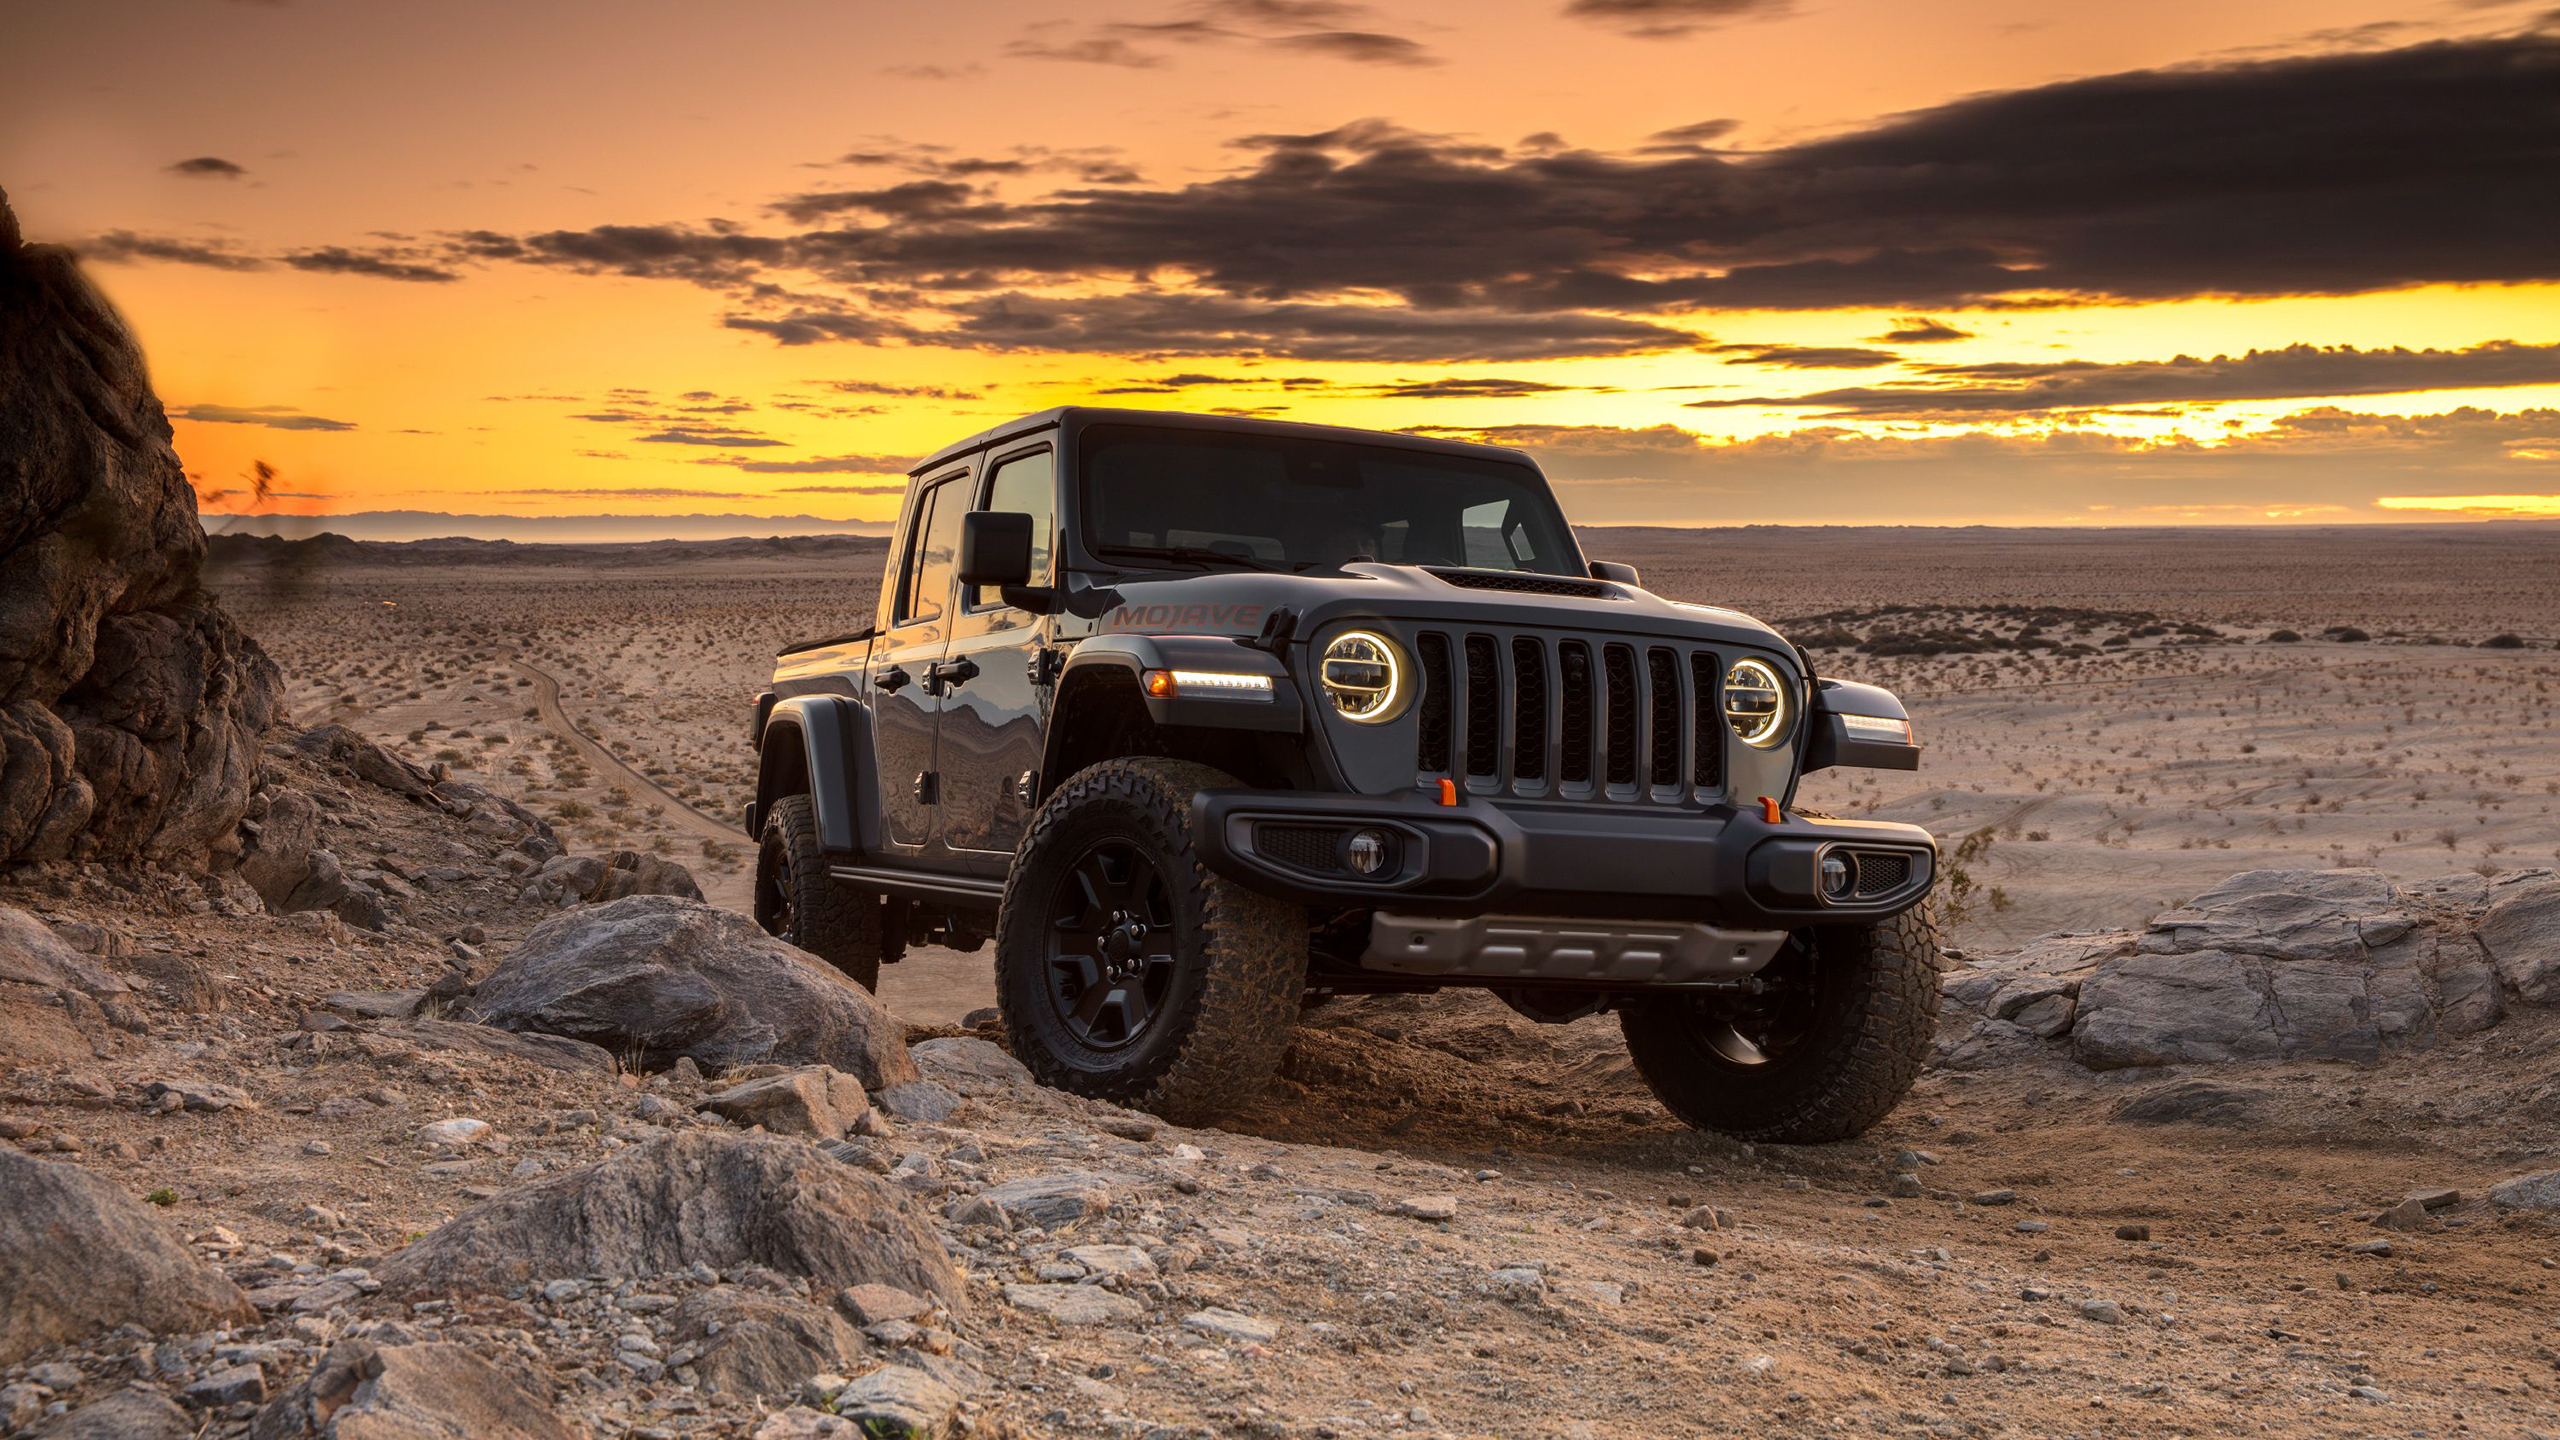 2020 Jeep Gladiator Mojave Wallpaper | HD Car Wallpapers | ID #14236